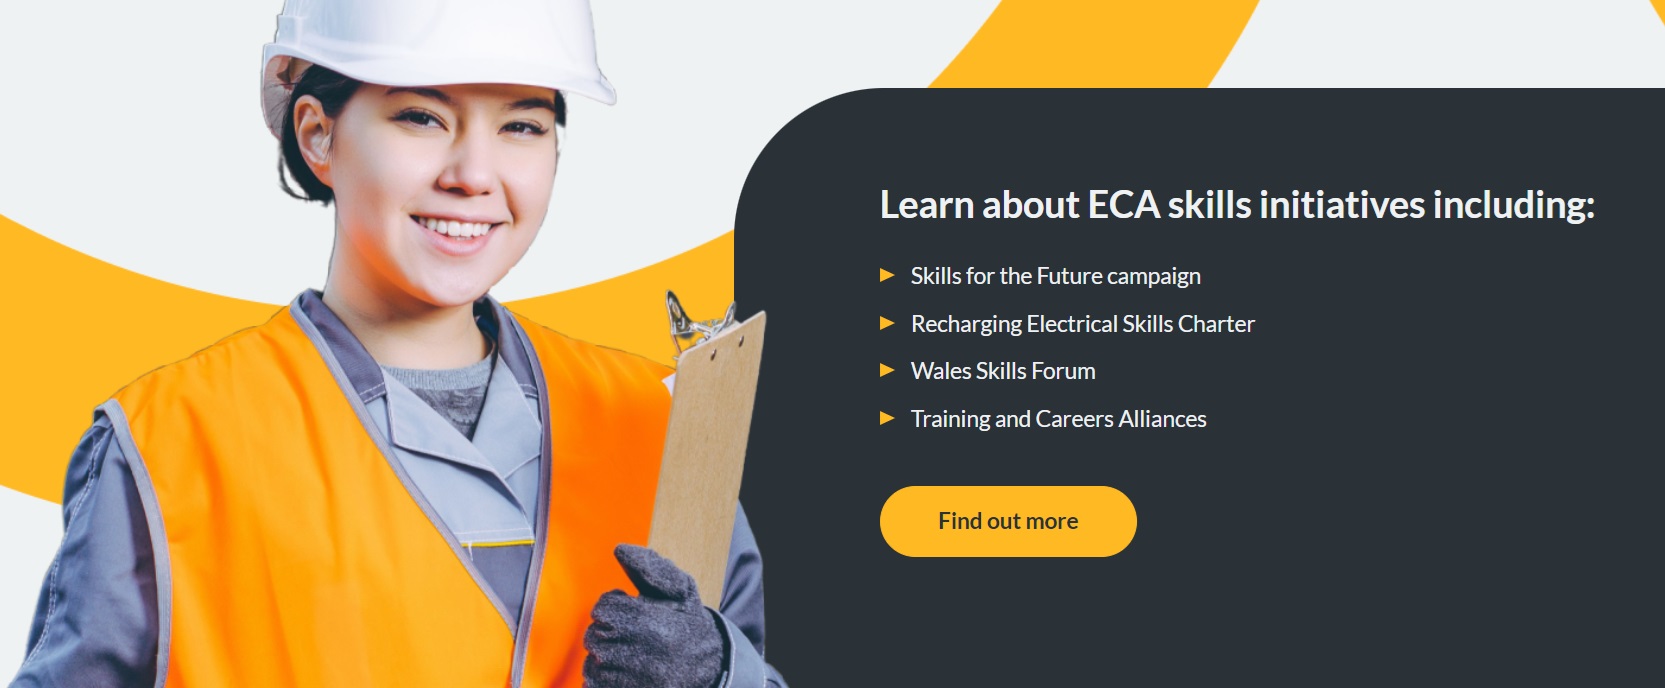 Eca apprenticeships page.jpg